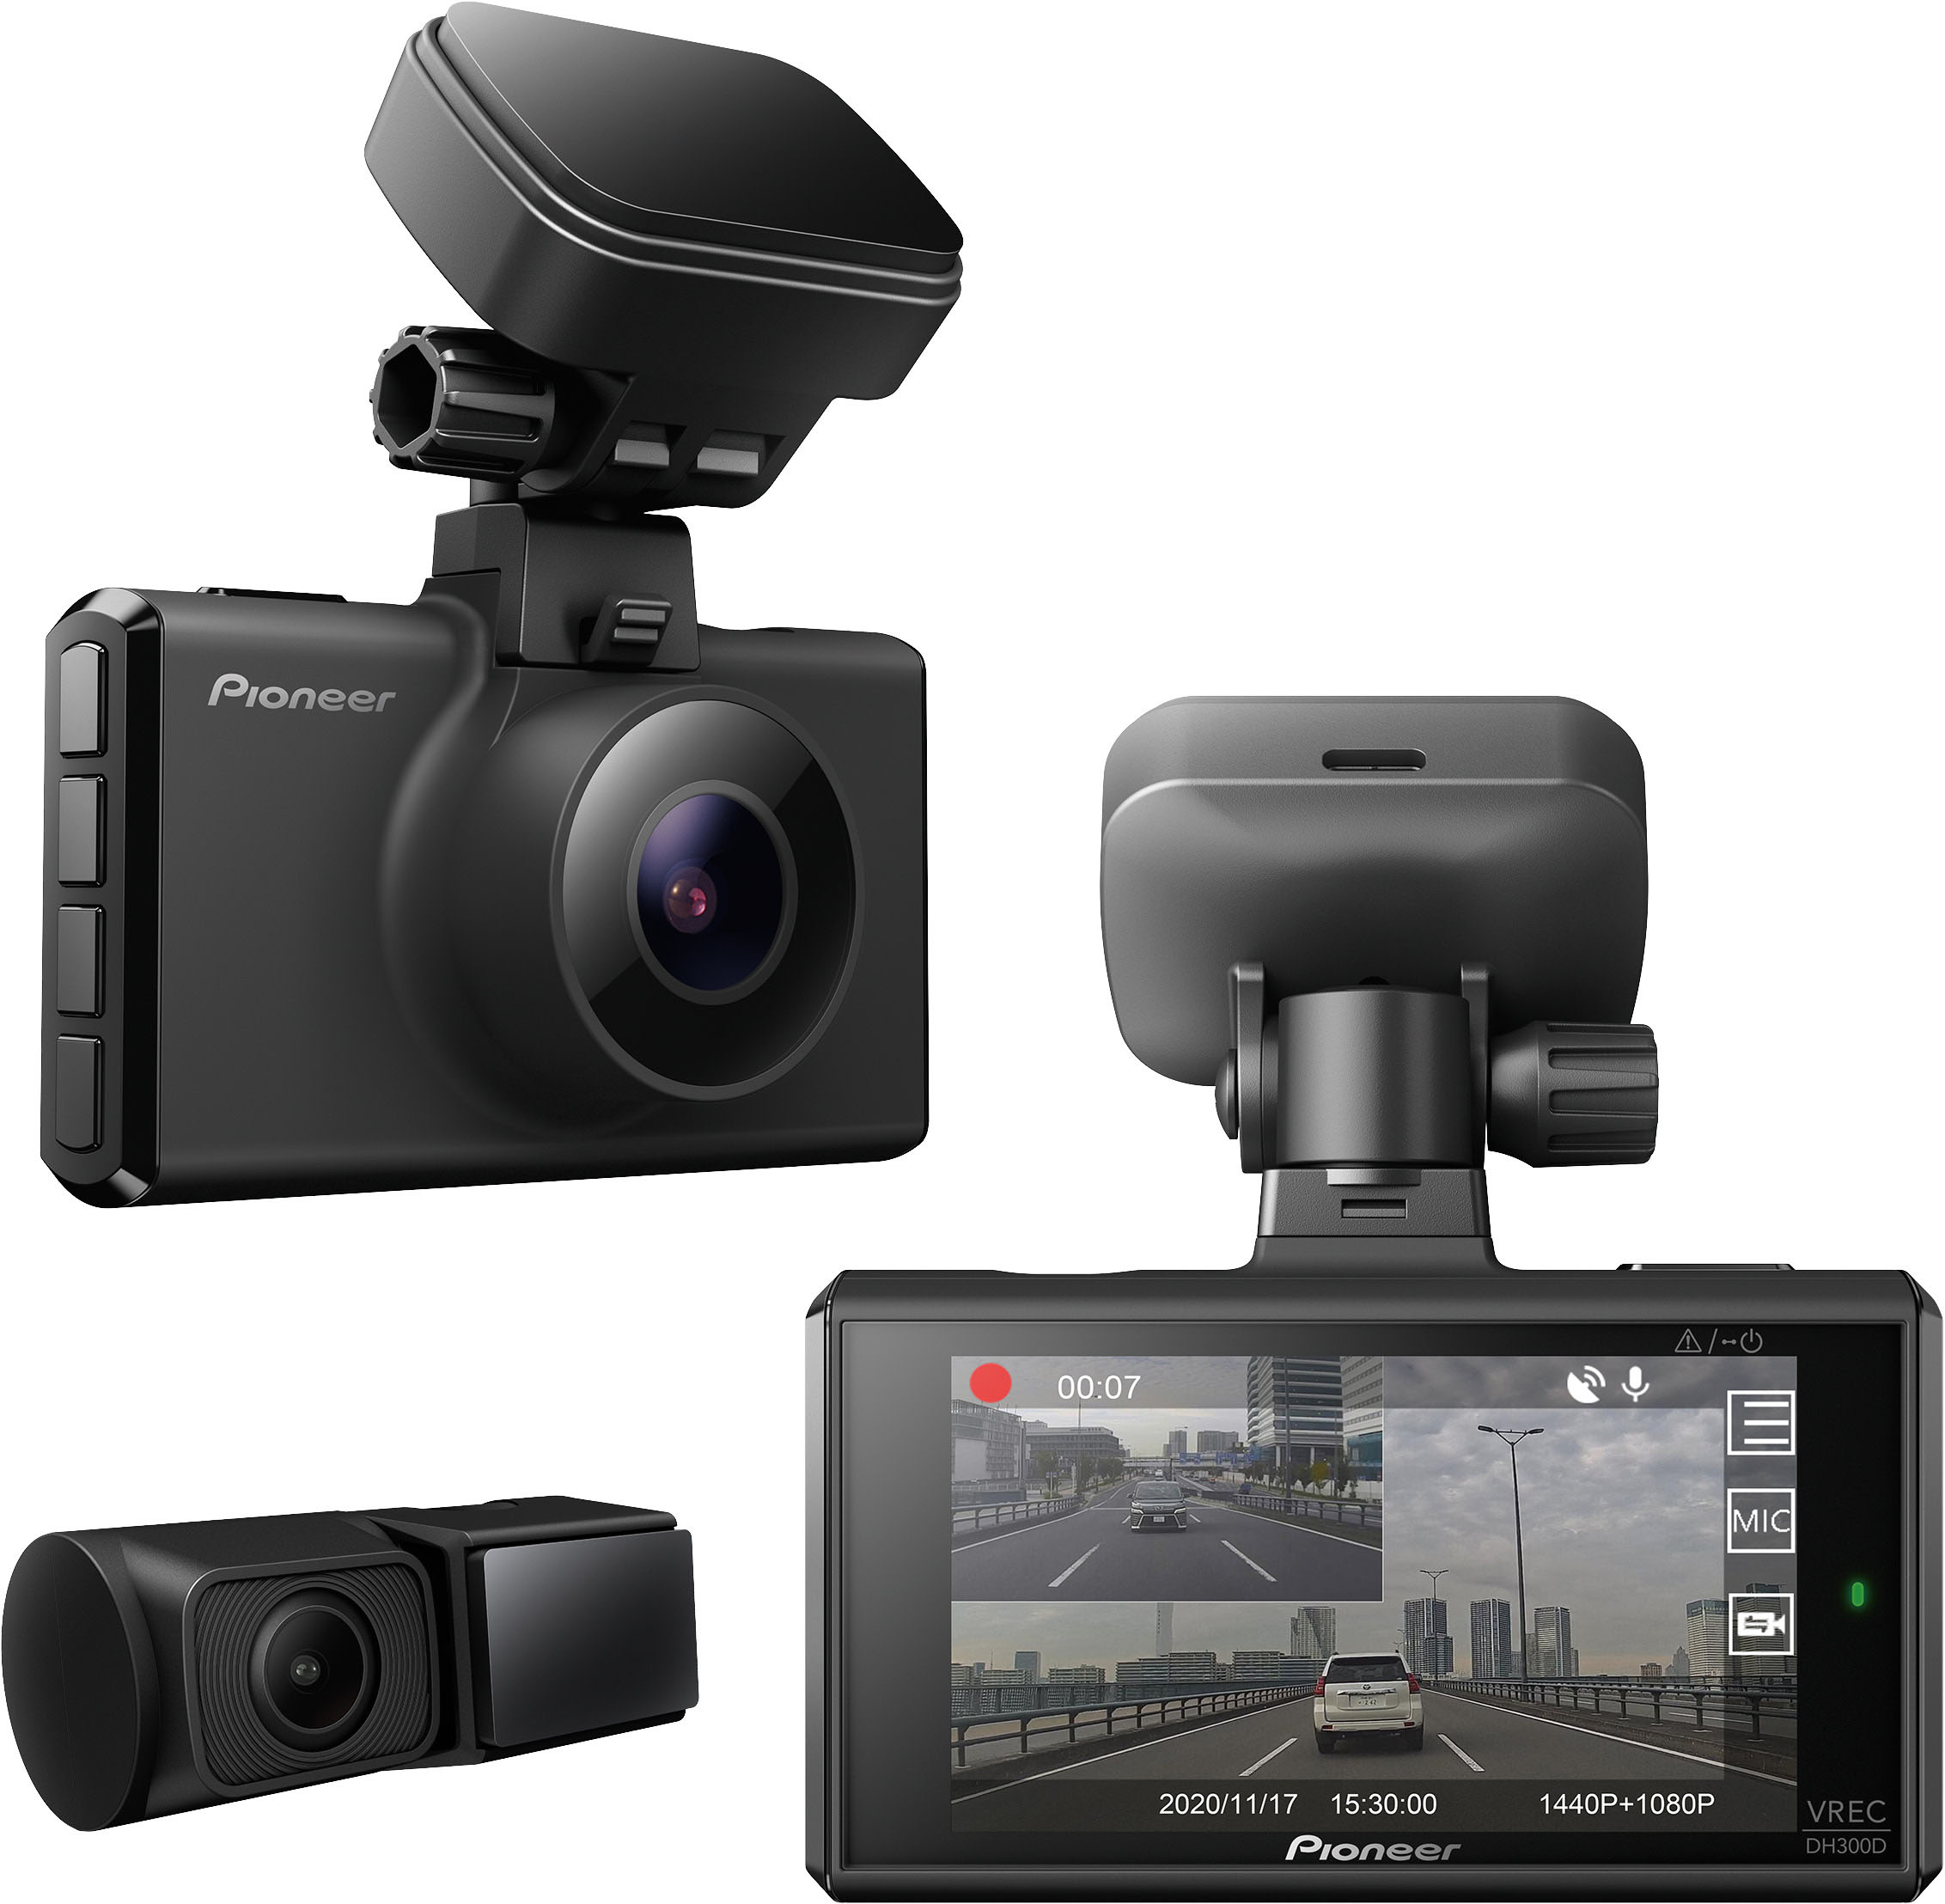 Dash Cams, Dash Cameras, Dash Cam